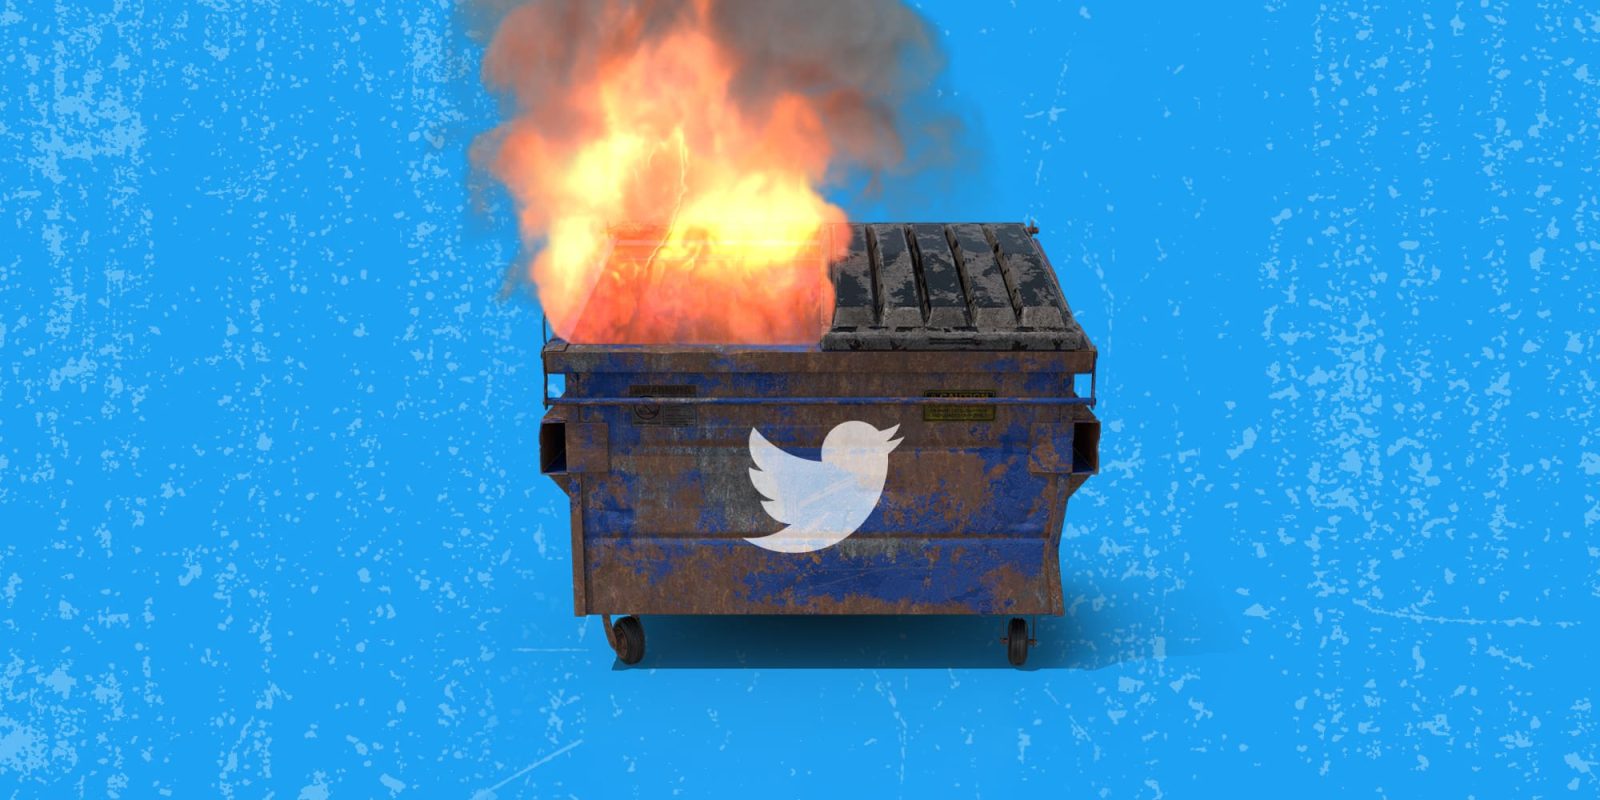 Dumpster fire on Twitter